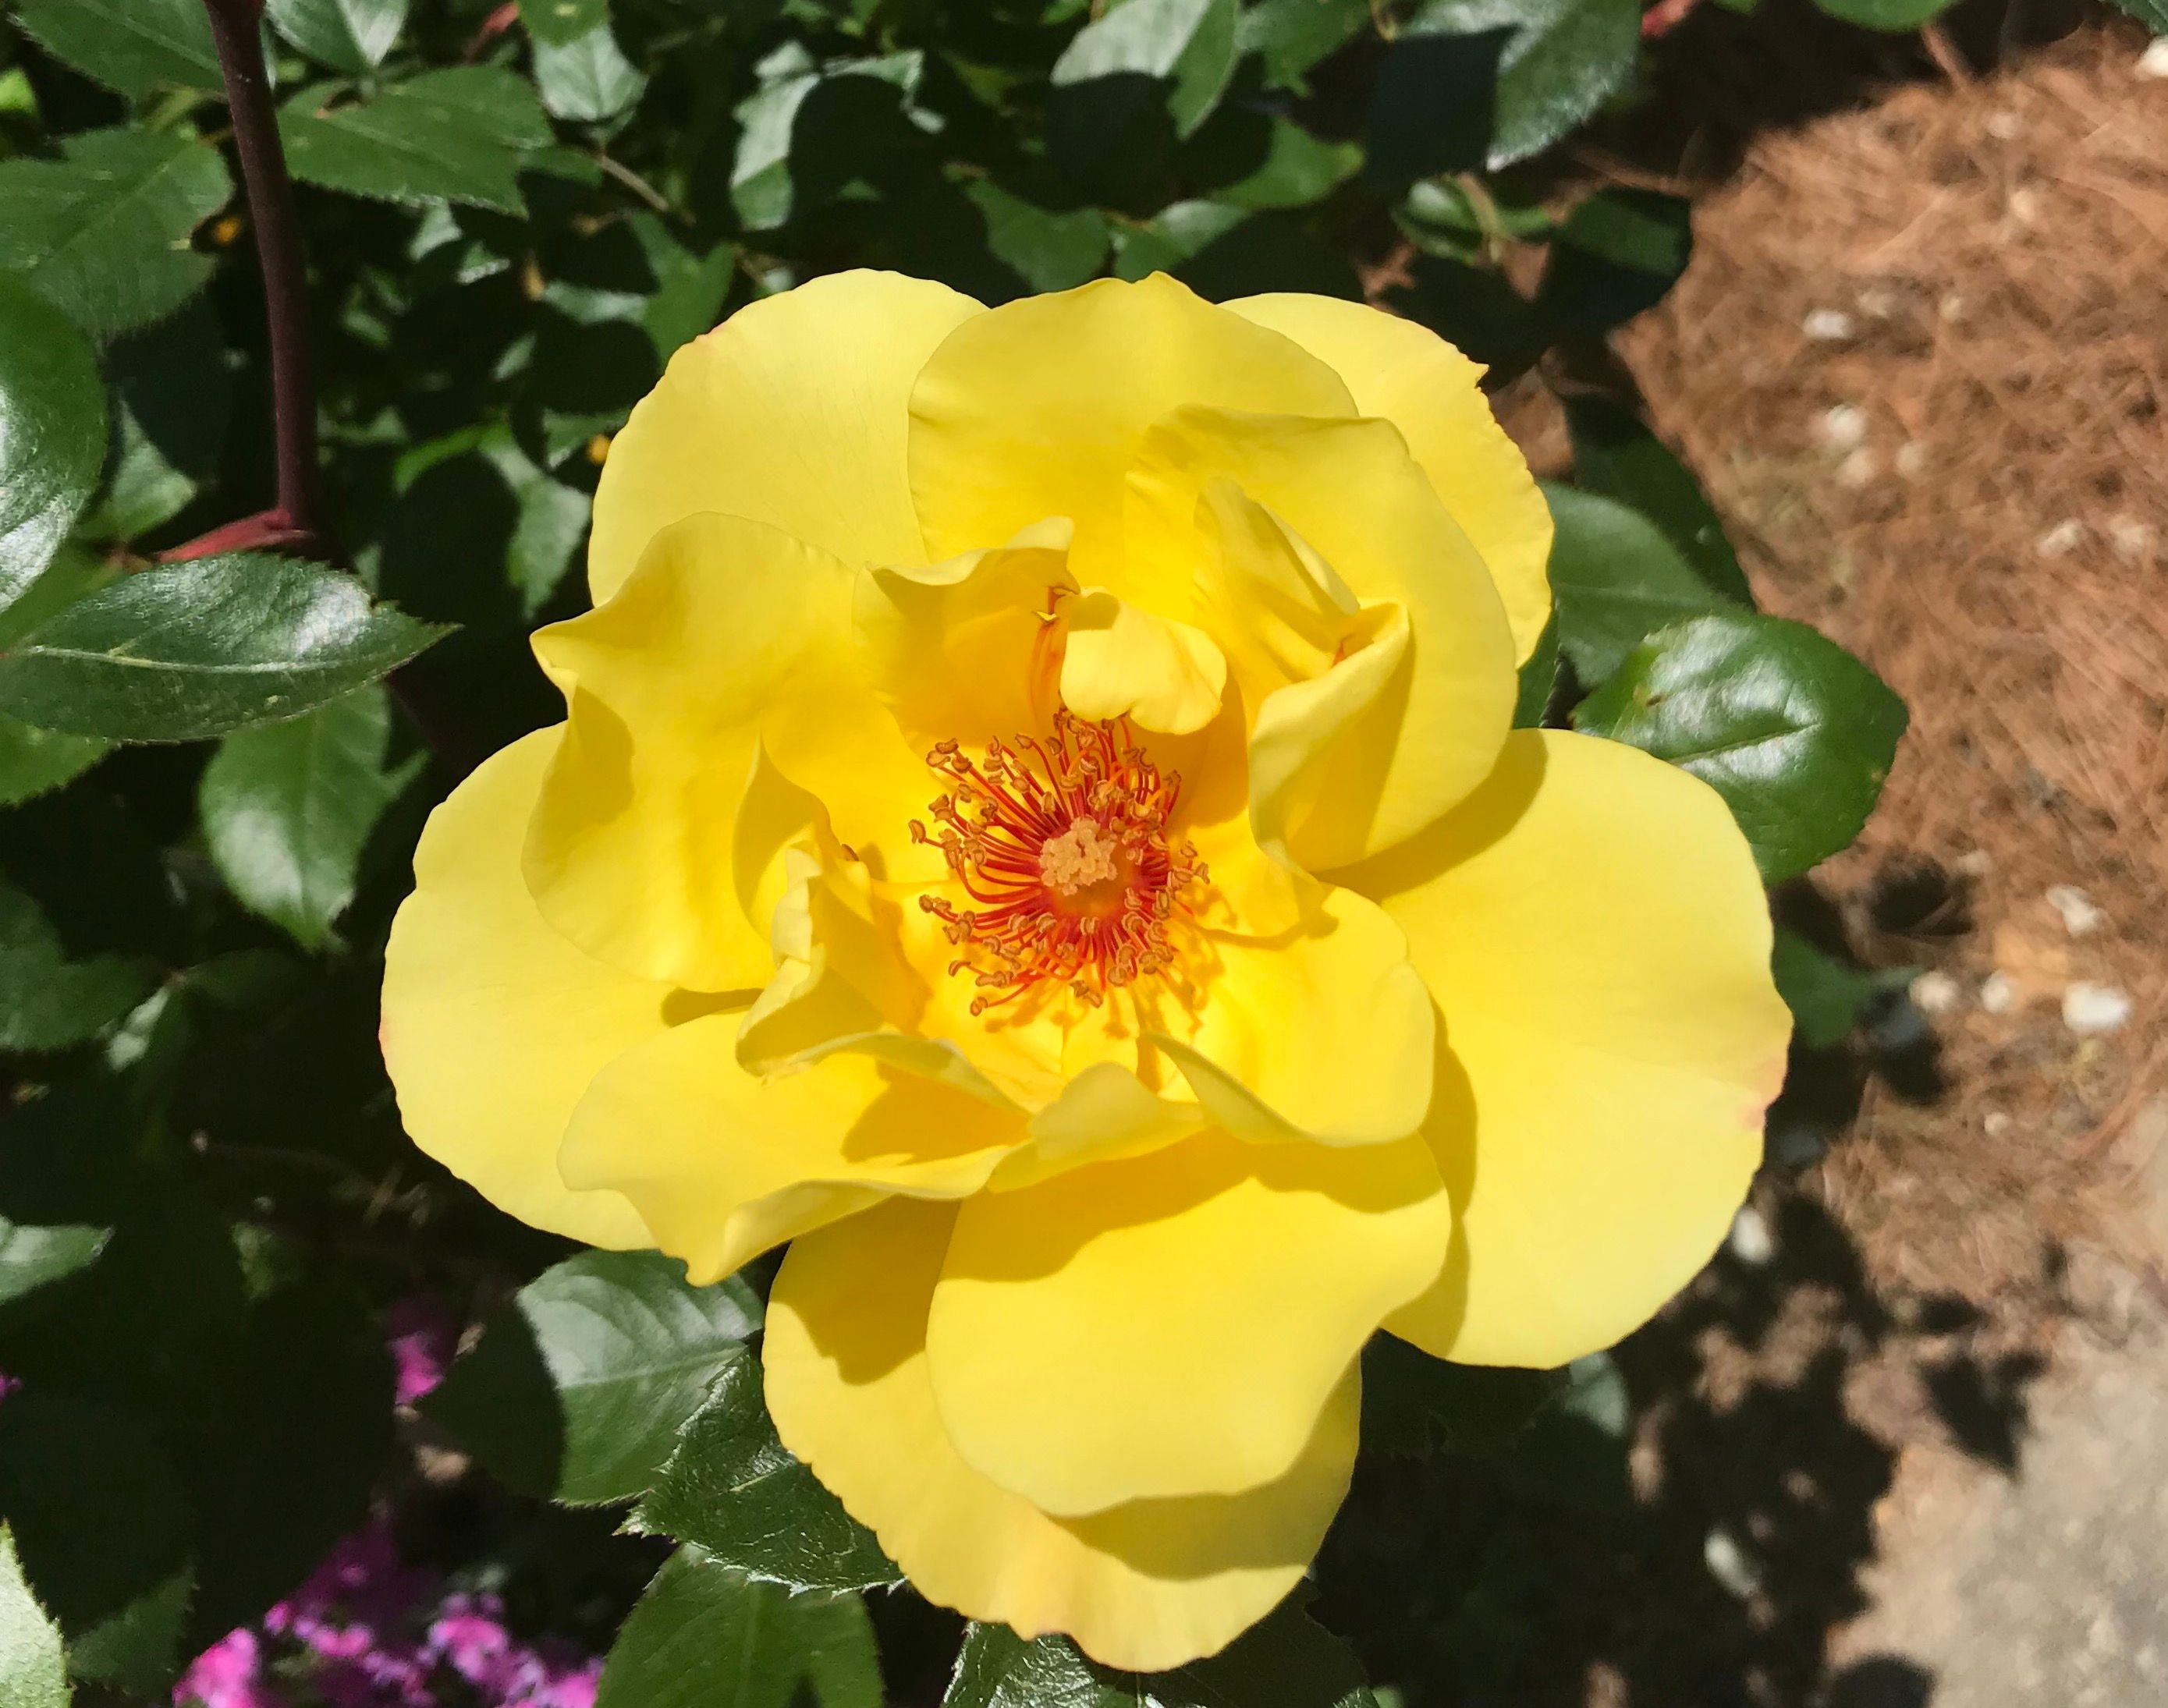 april flowers - yellow rose.JPG